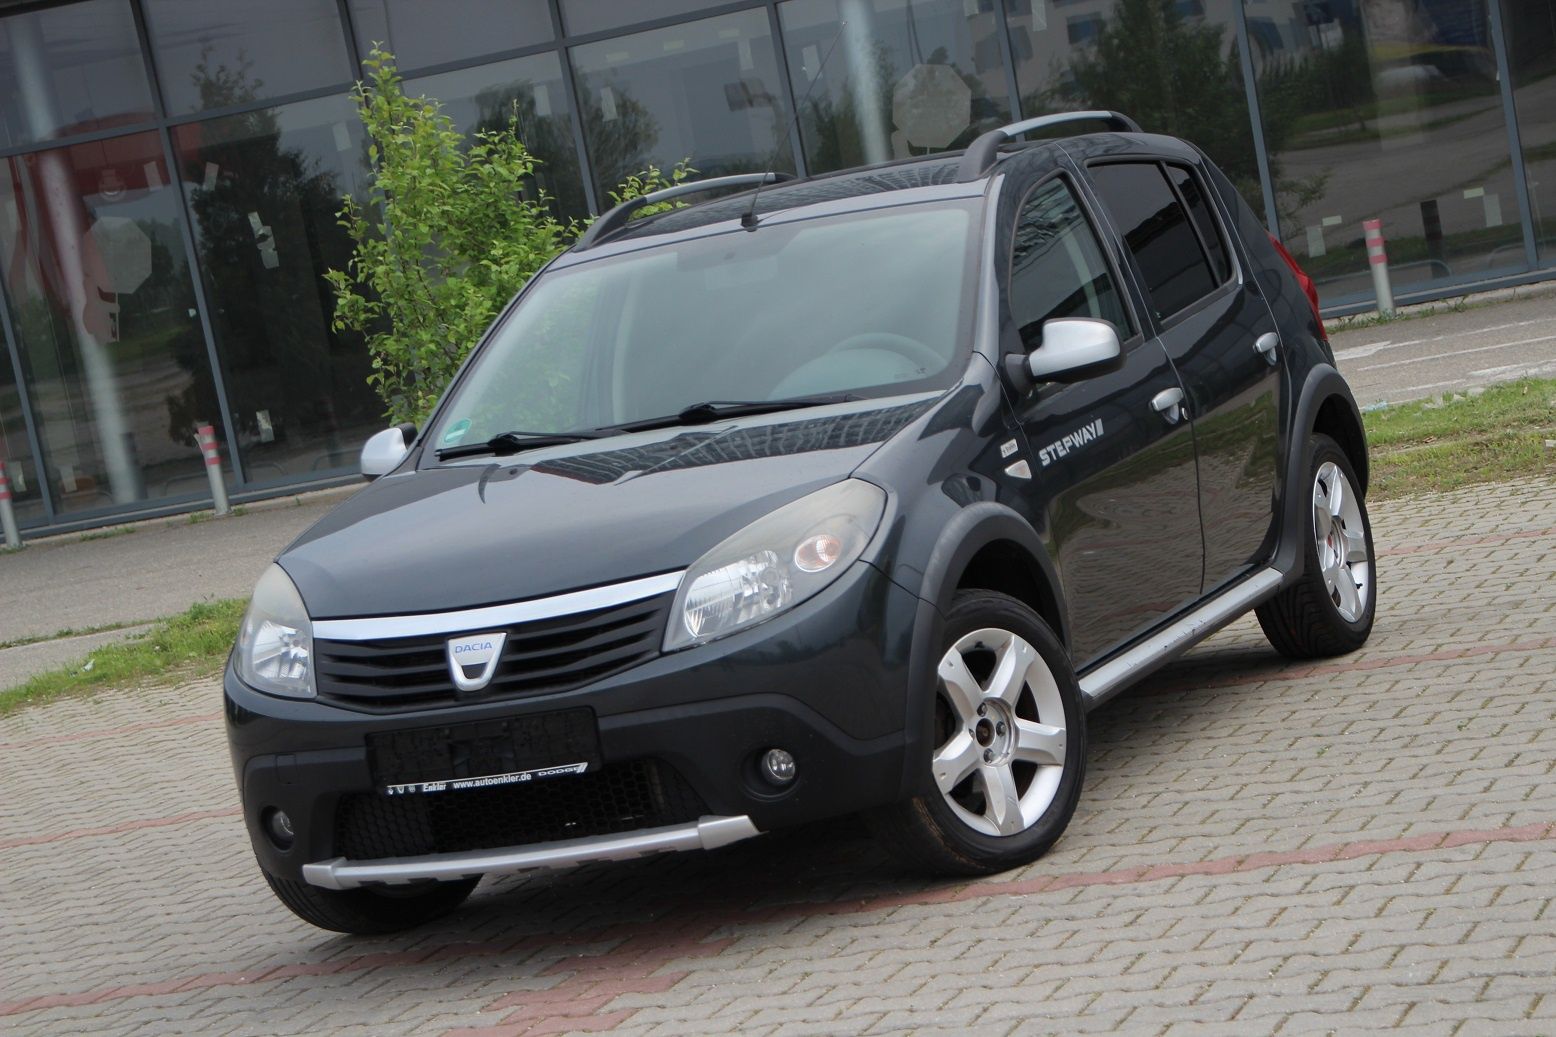 Dacia Sandero Stepway 1.6 MPI Euro 5 fab 2012